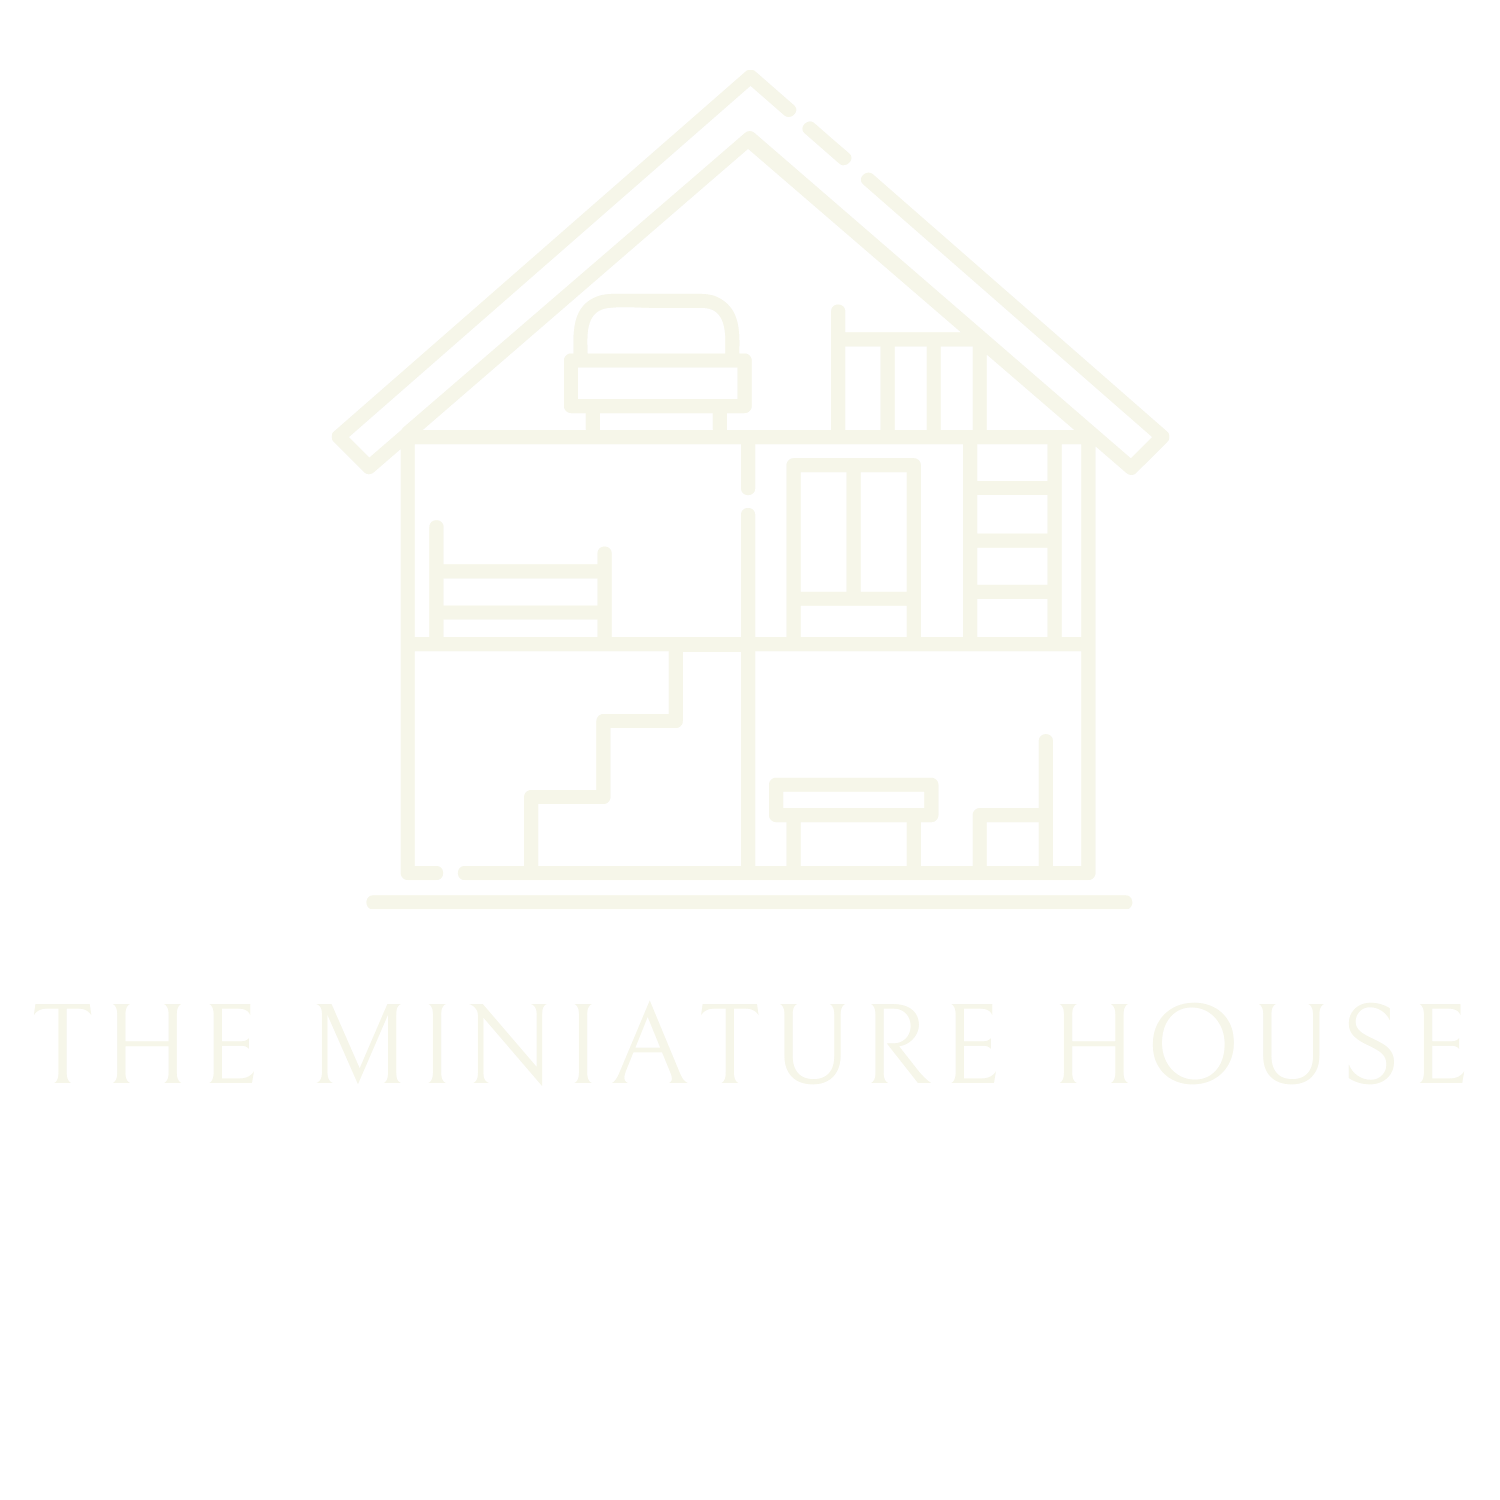 The Miniature House